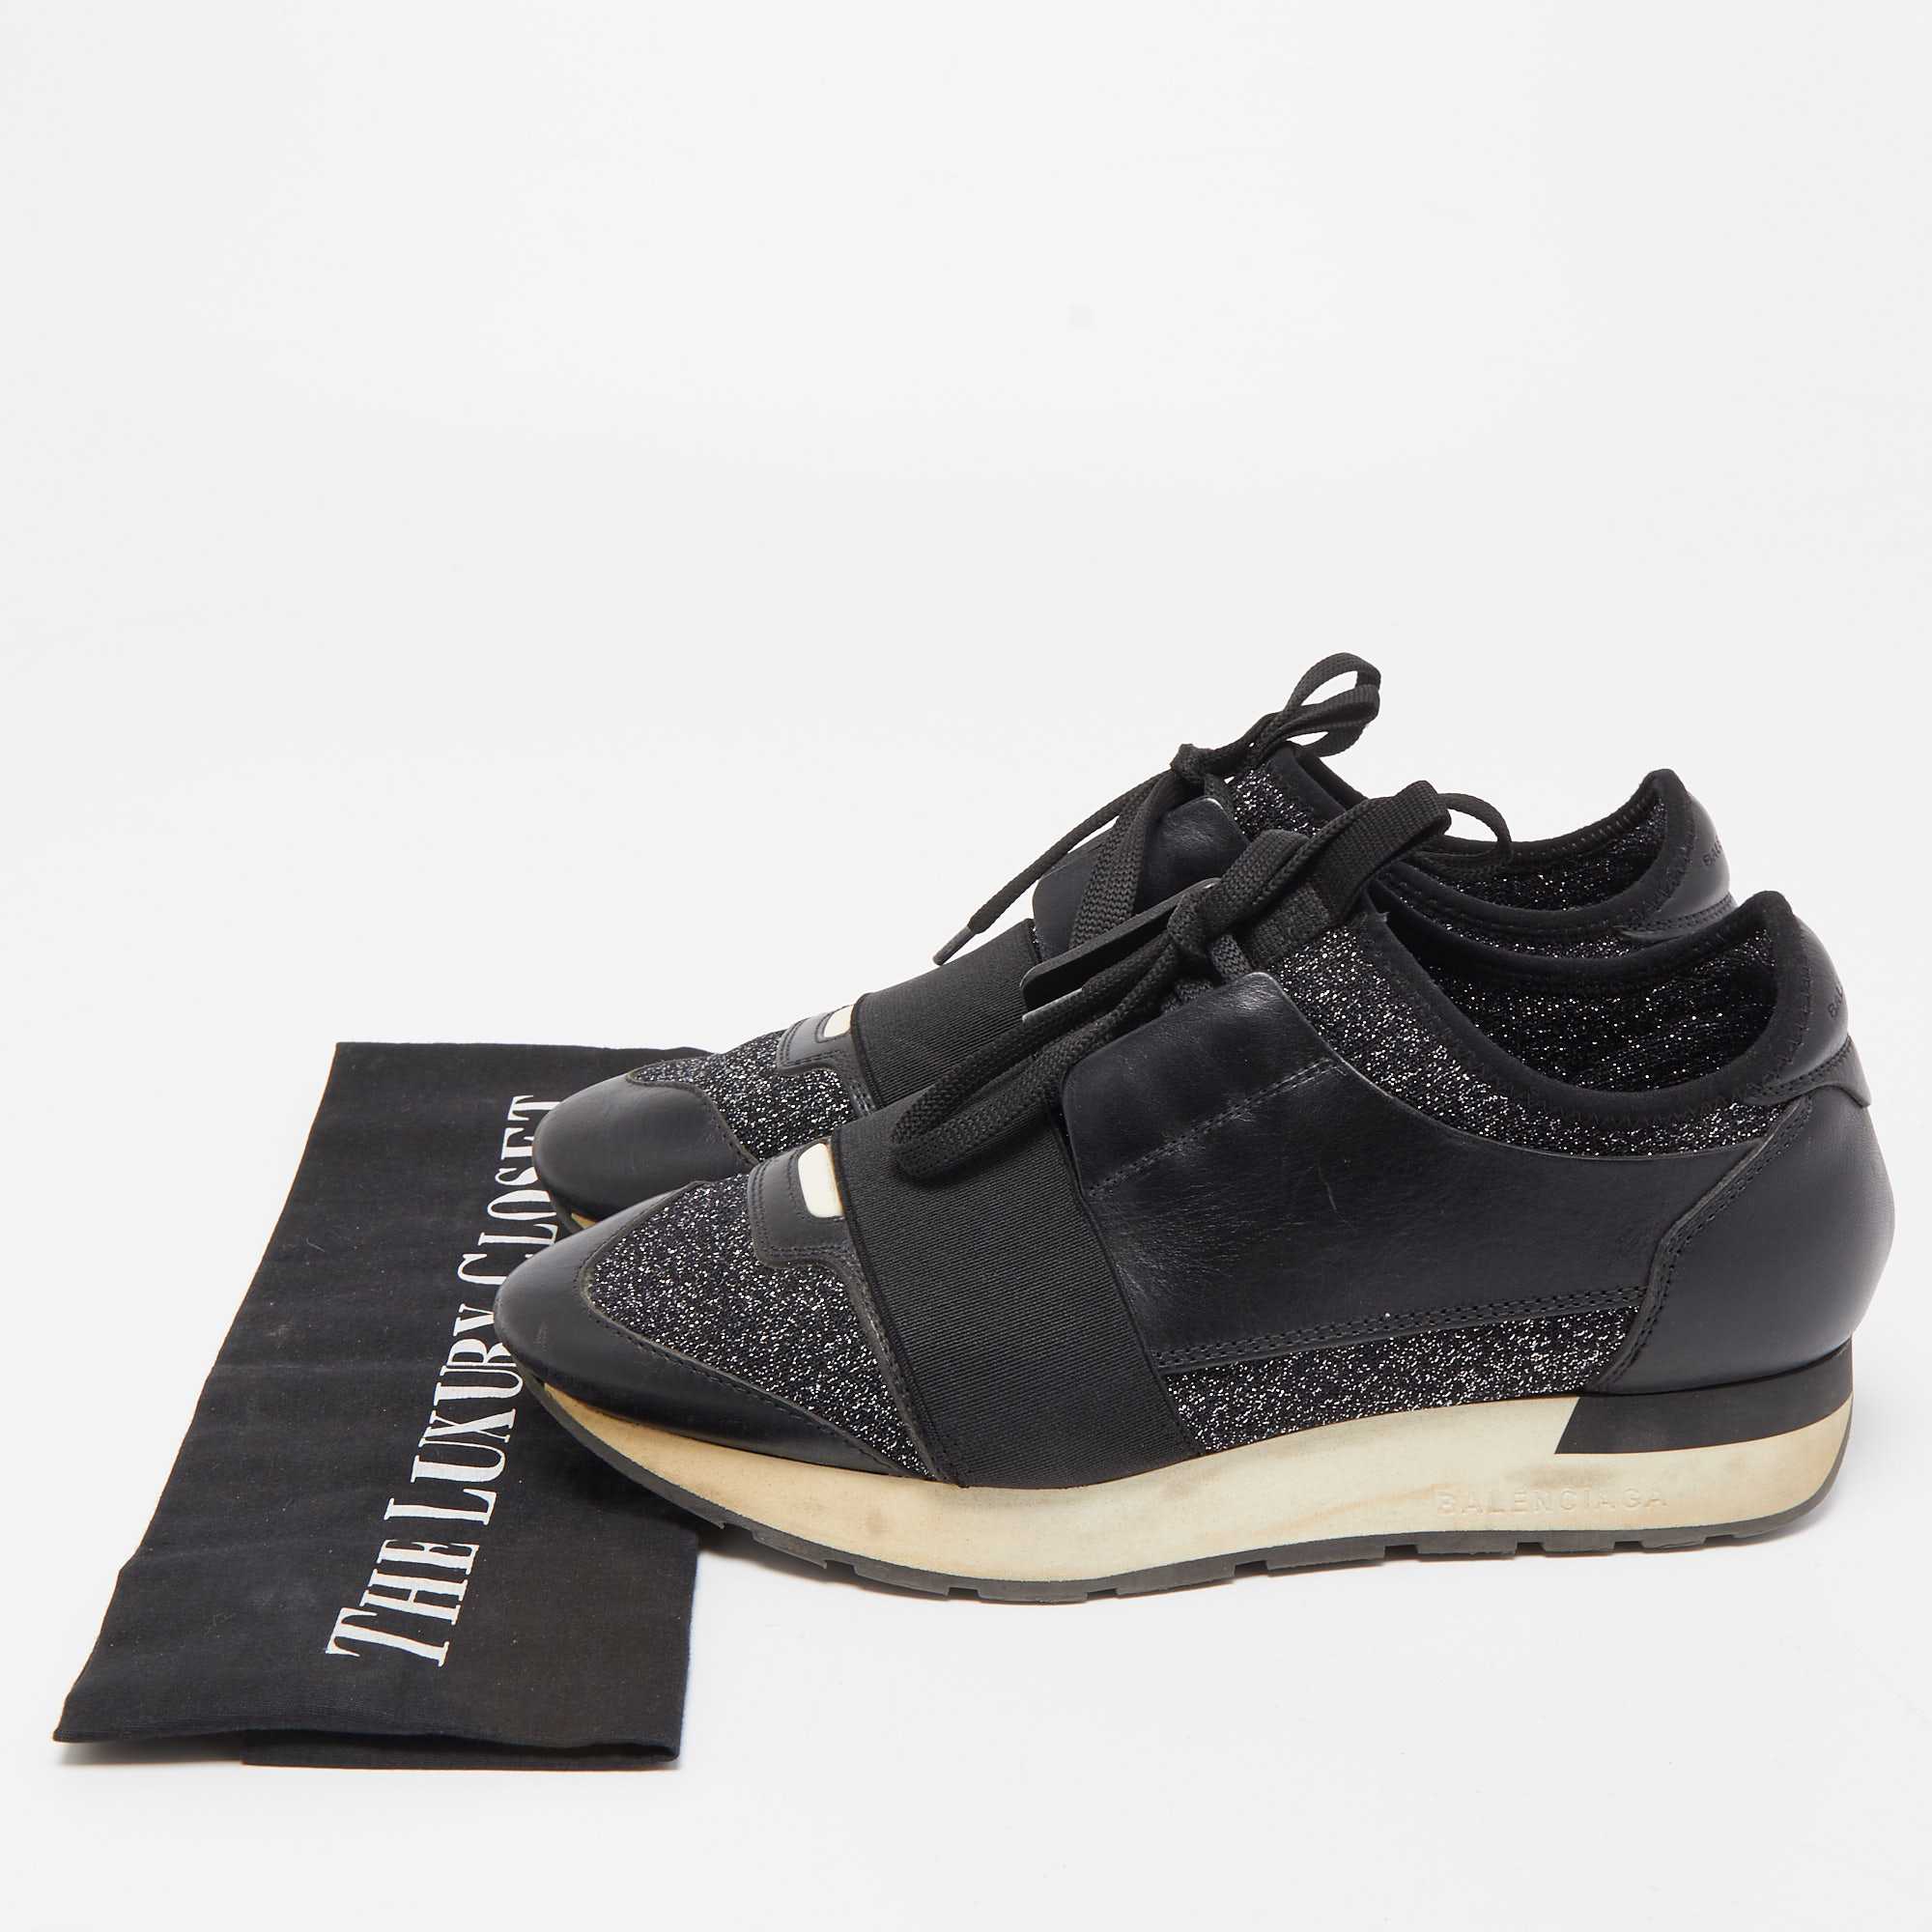 Balenciaga Black Leather And Metallic Fabric Race Runner Sneakers Size 37